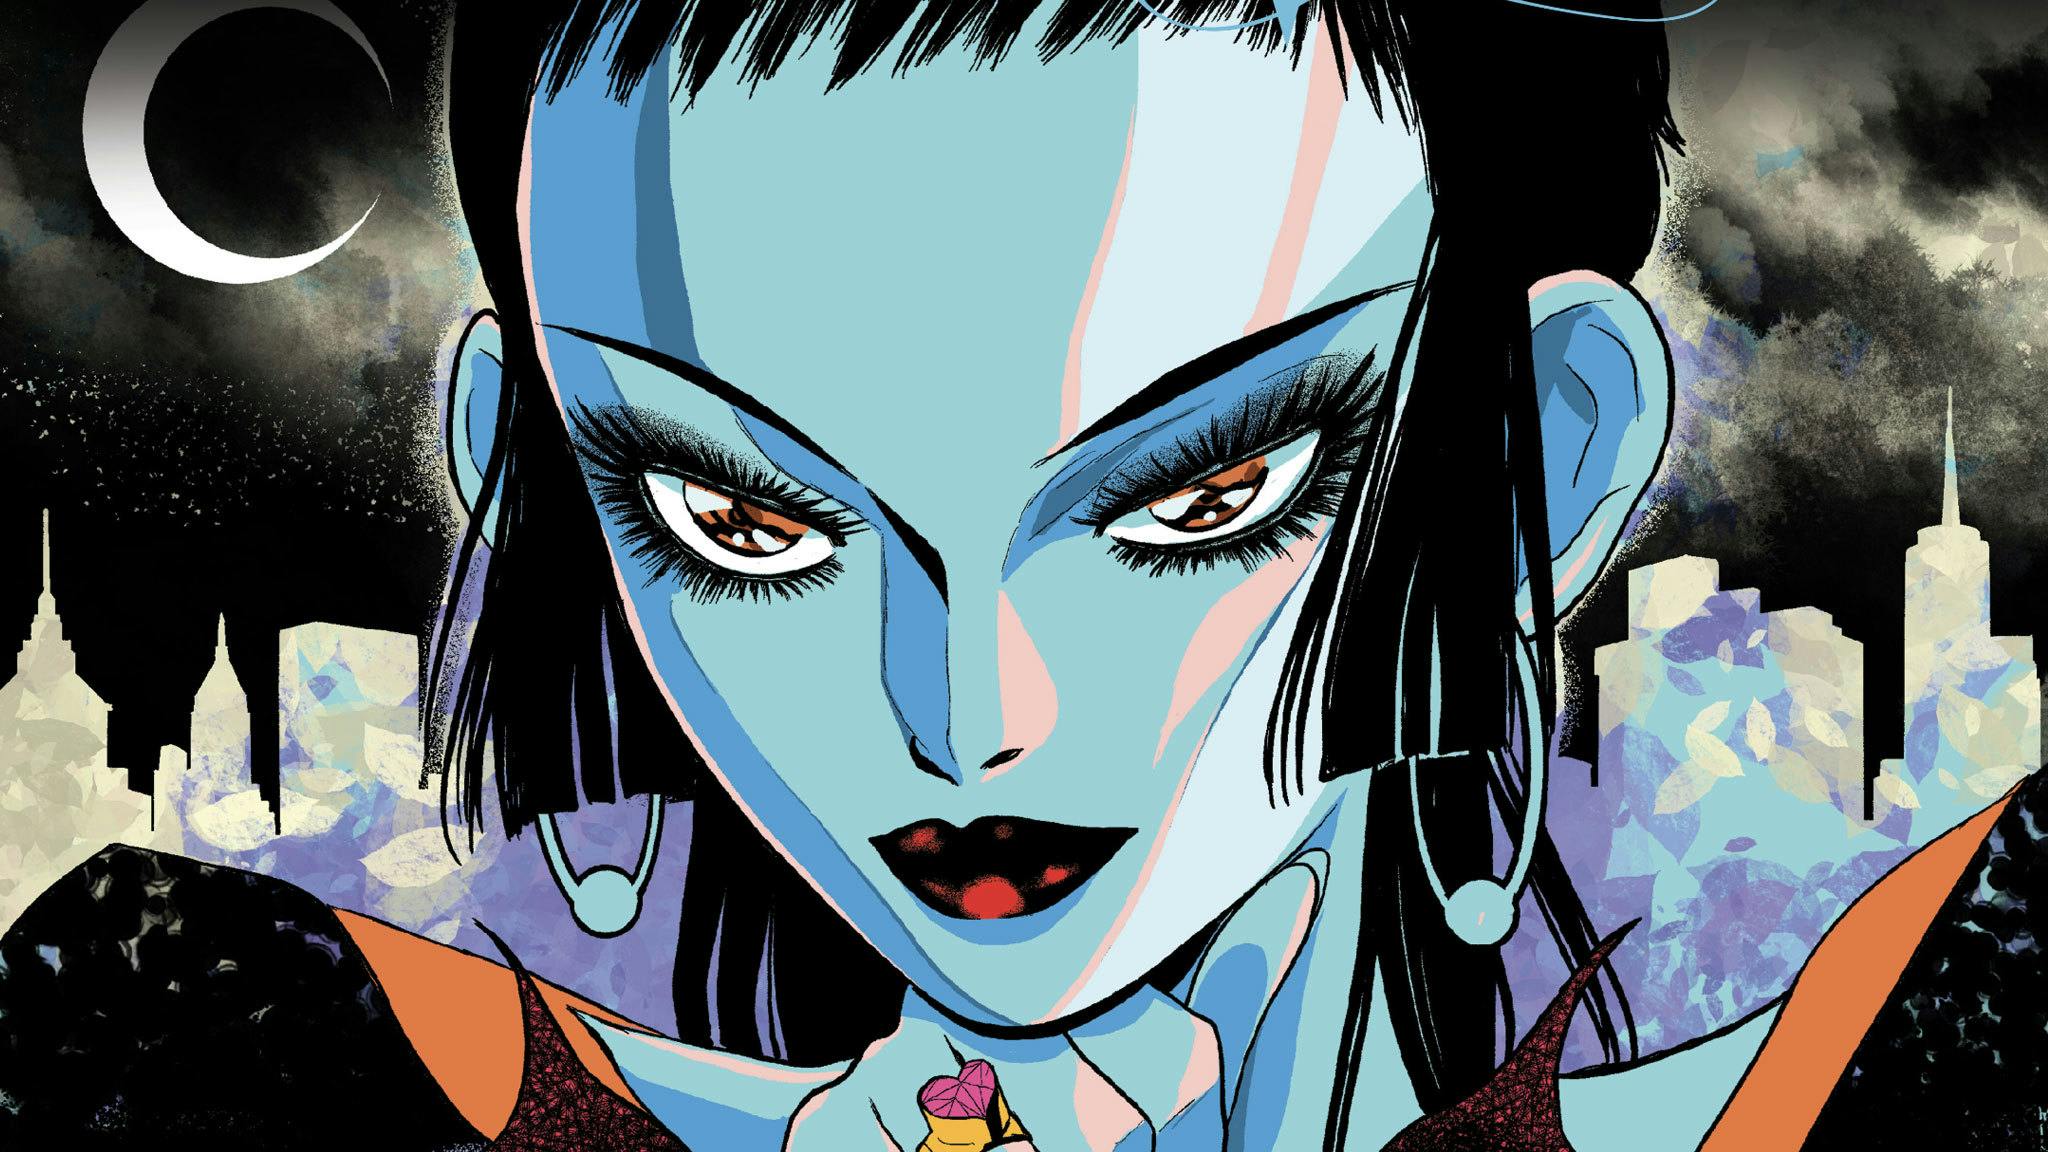 Poppy presents new “horror opus” Z2 graphic novel, Tit Tat